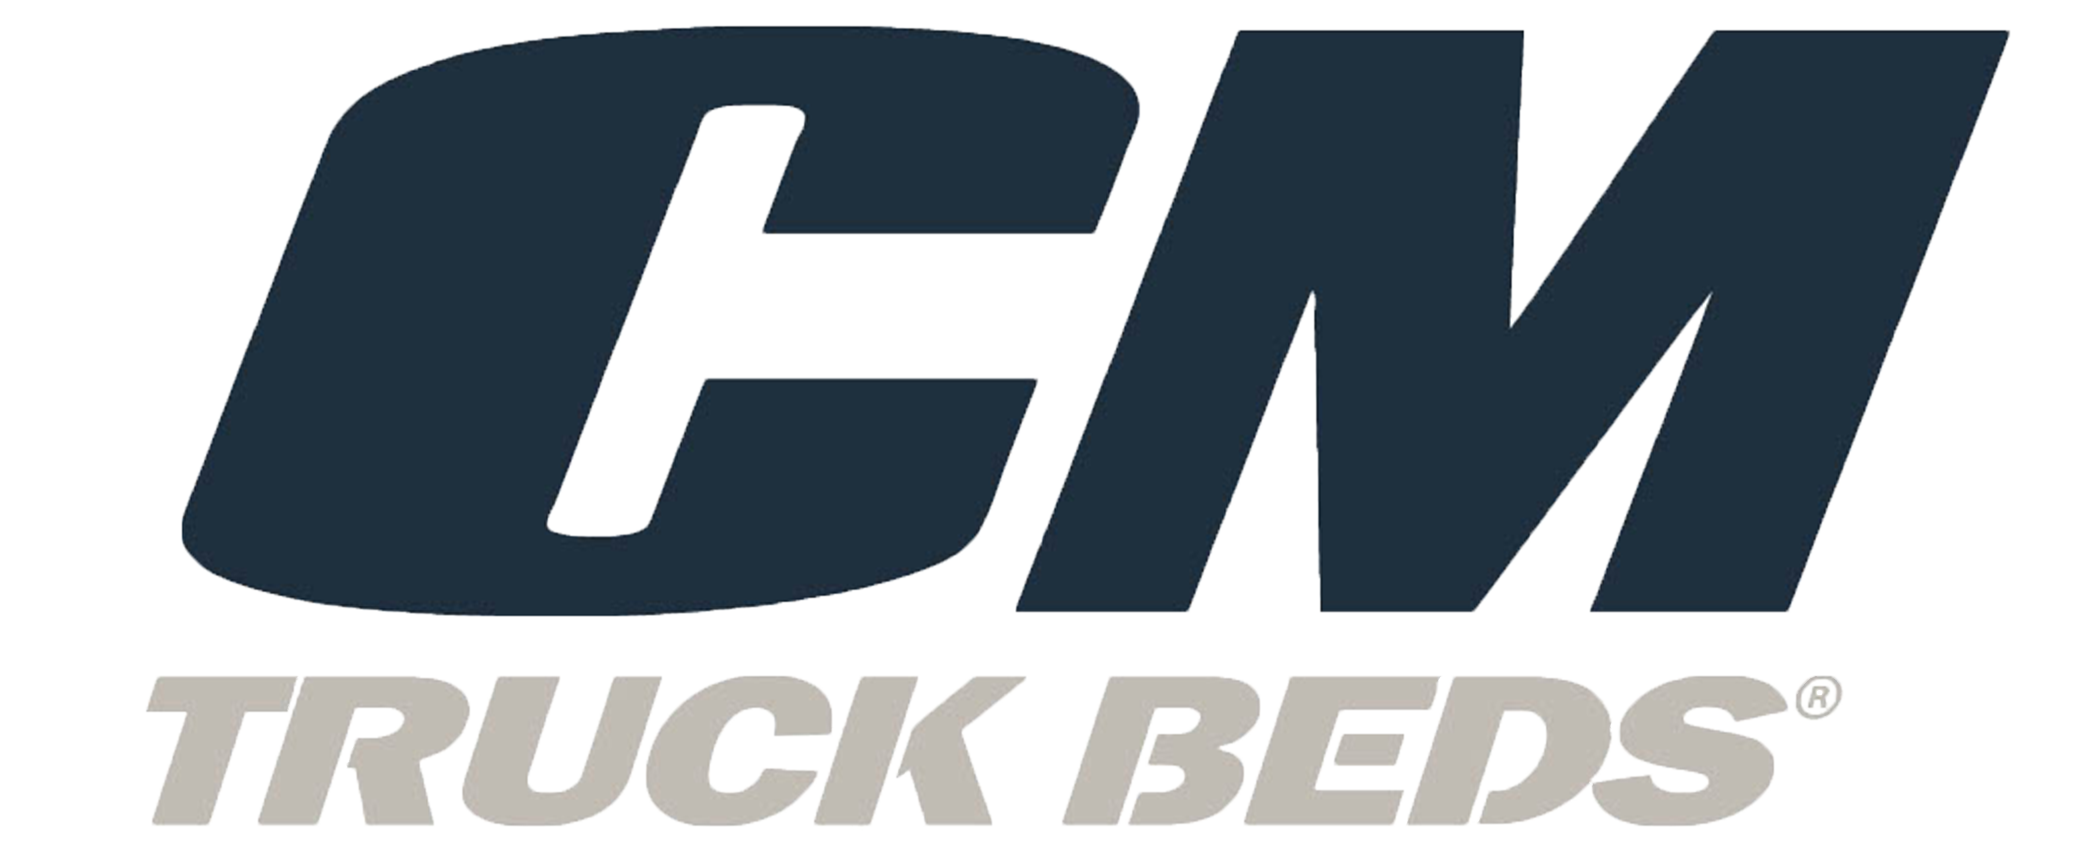 CM Truck Beds logo image